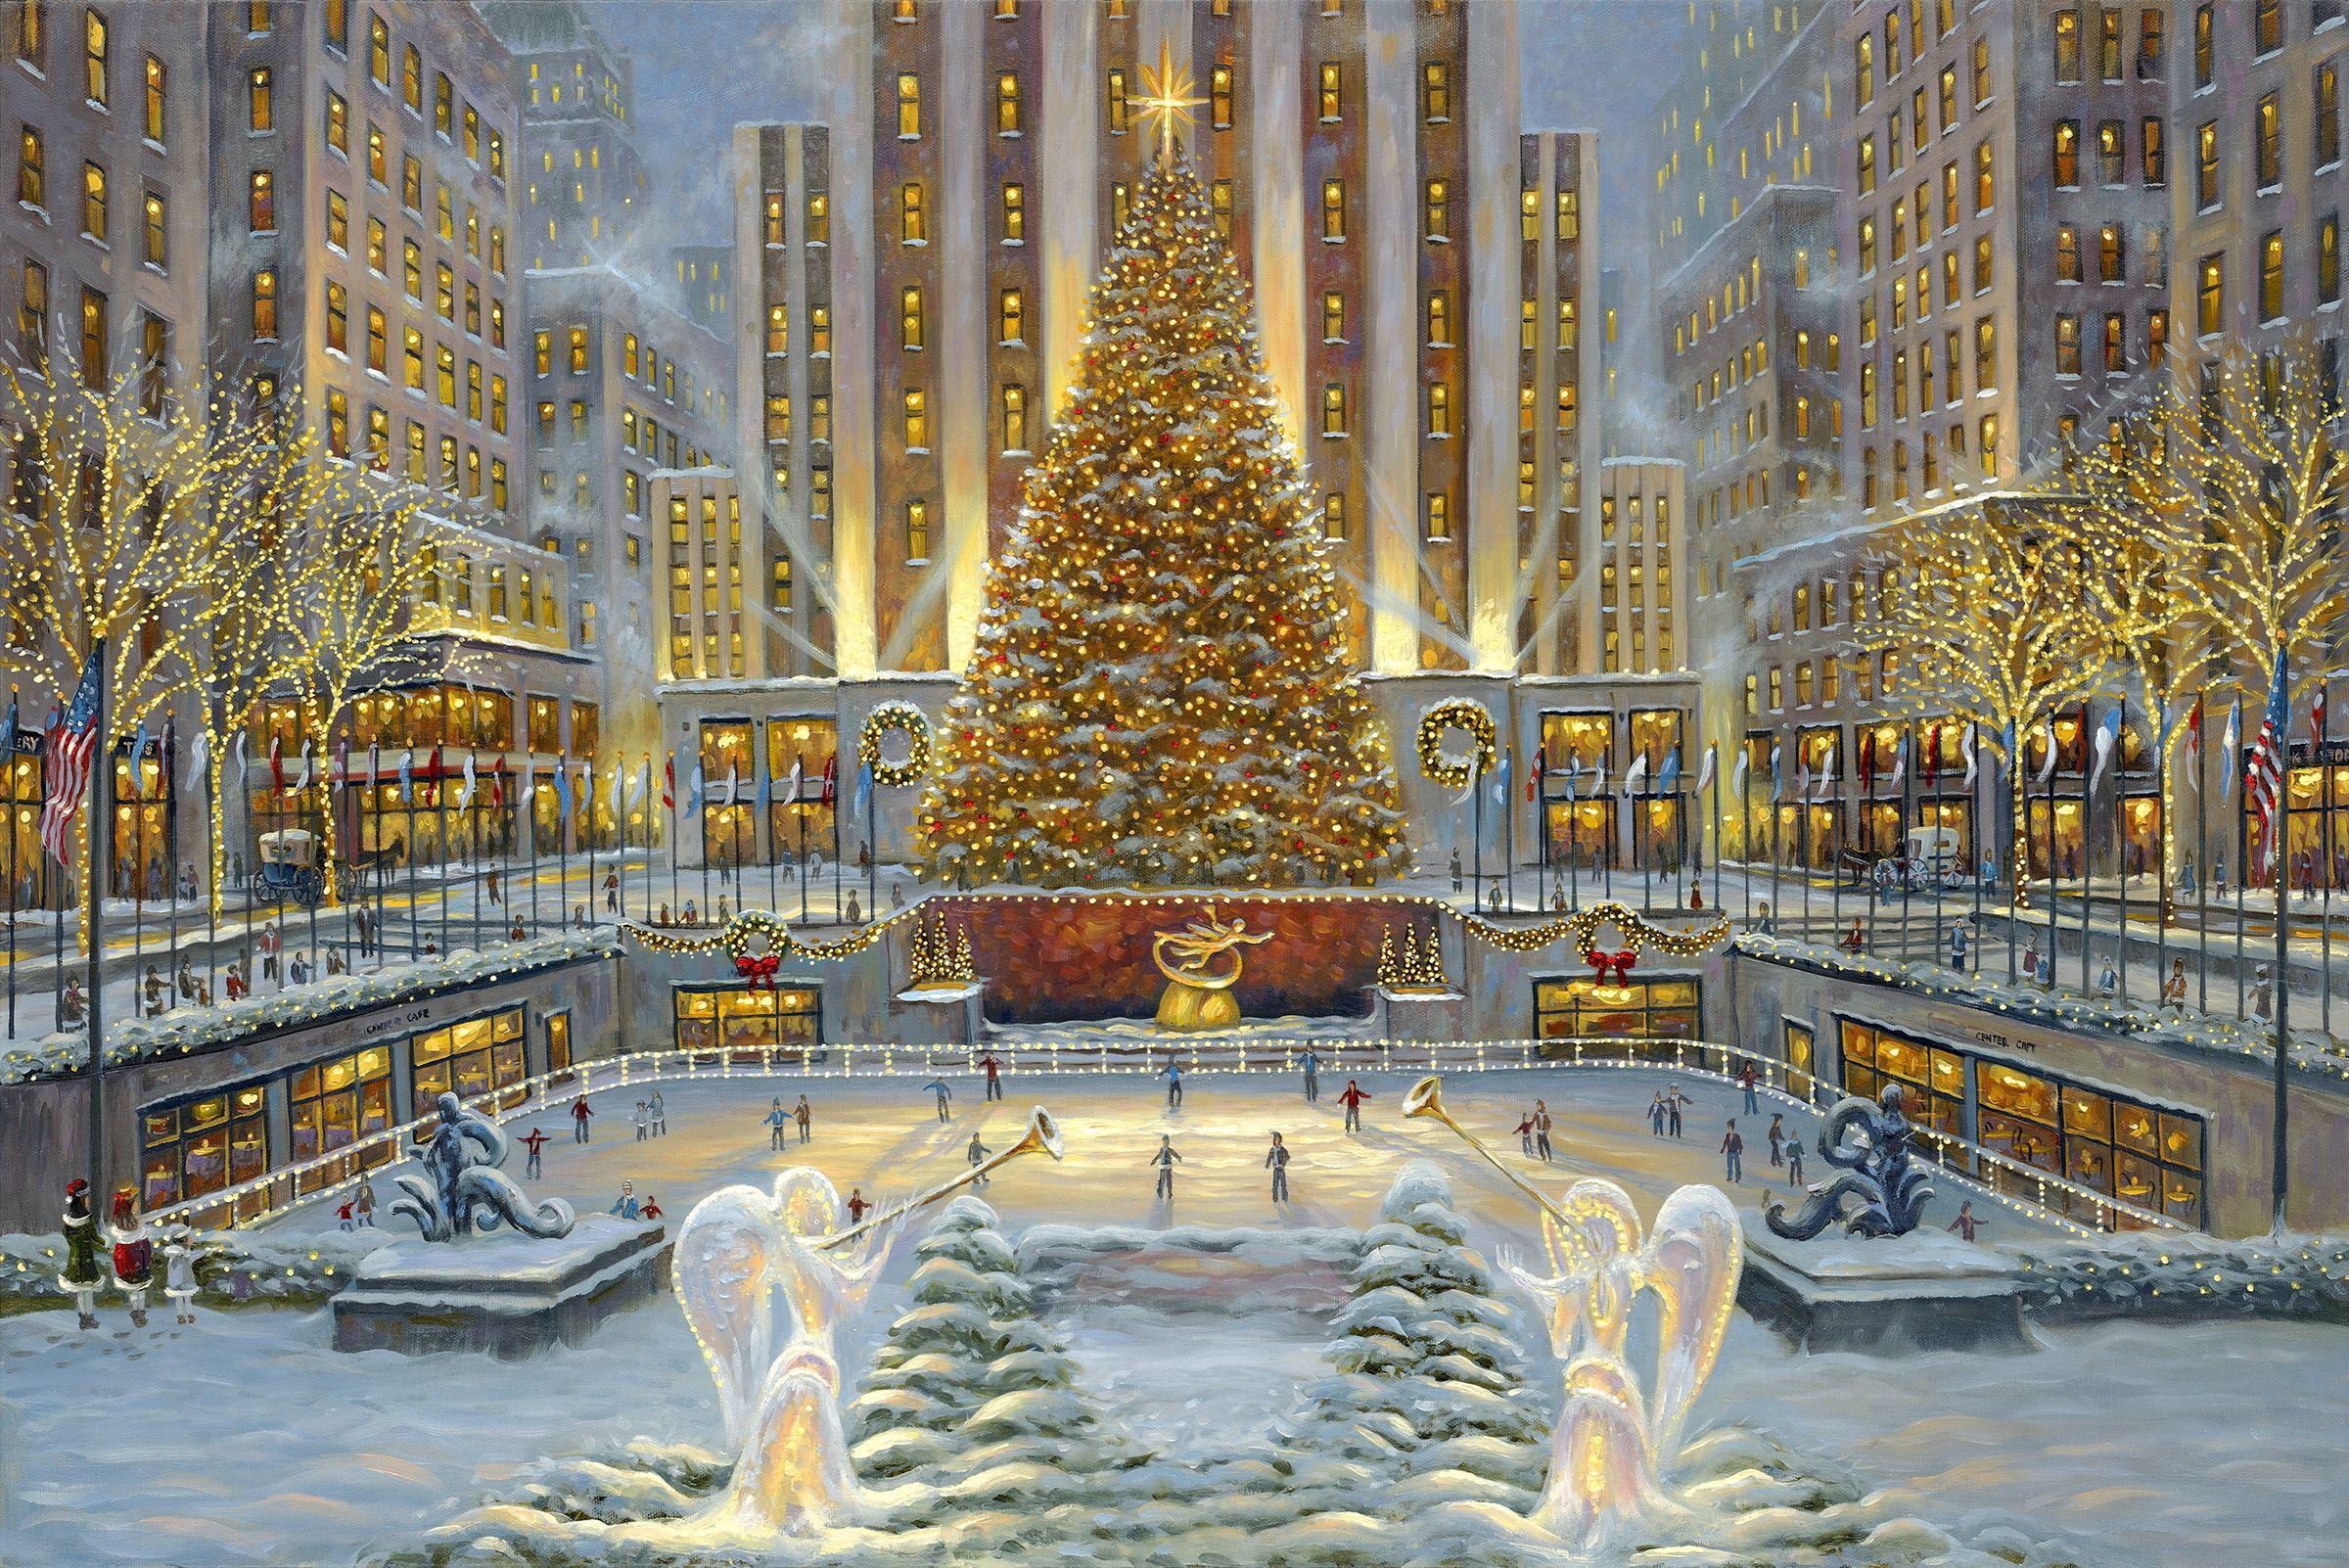 Rockefeller Center at Christmastime. HD Wallpaper. Background Image